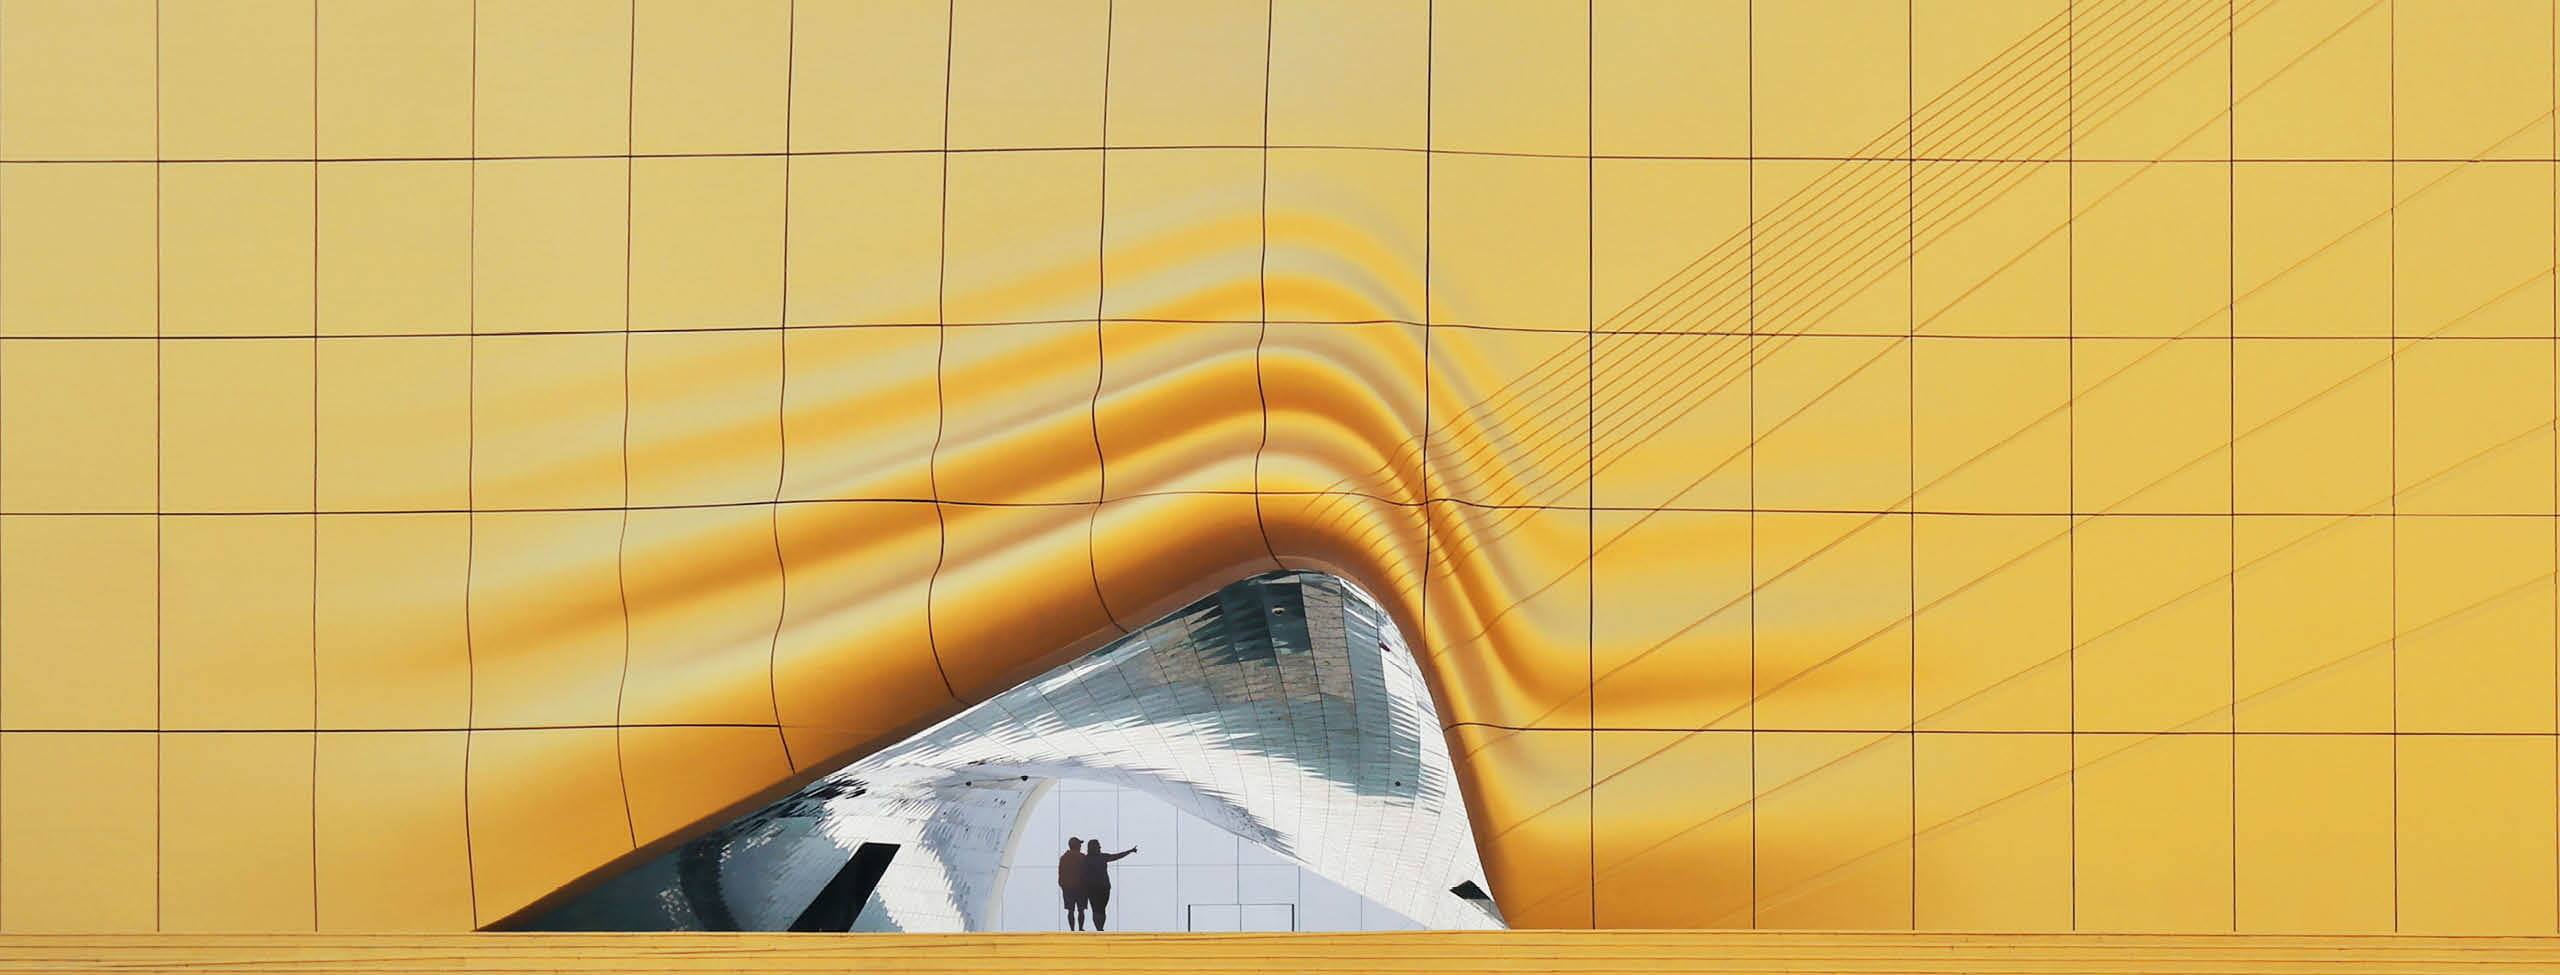 Yellow abstract wall